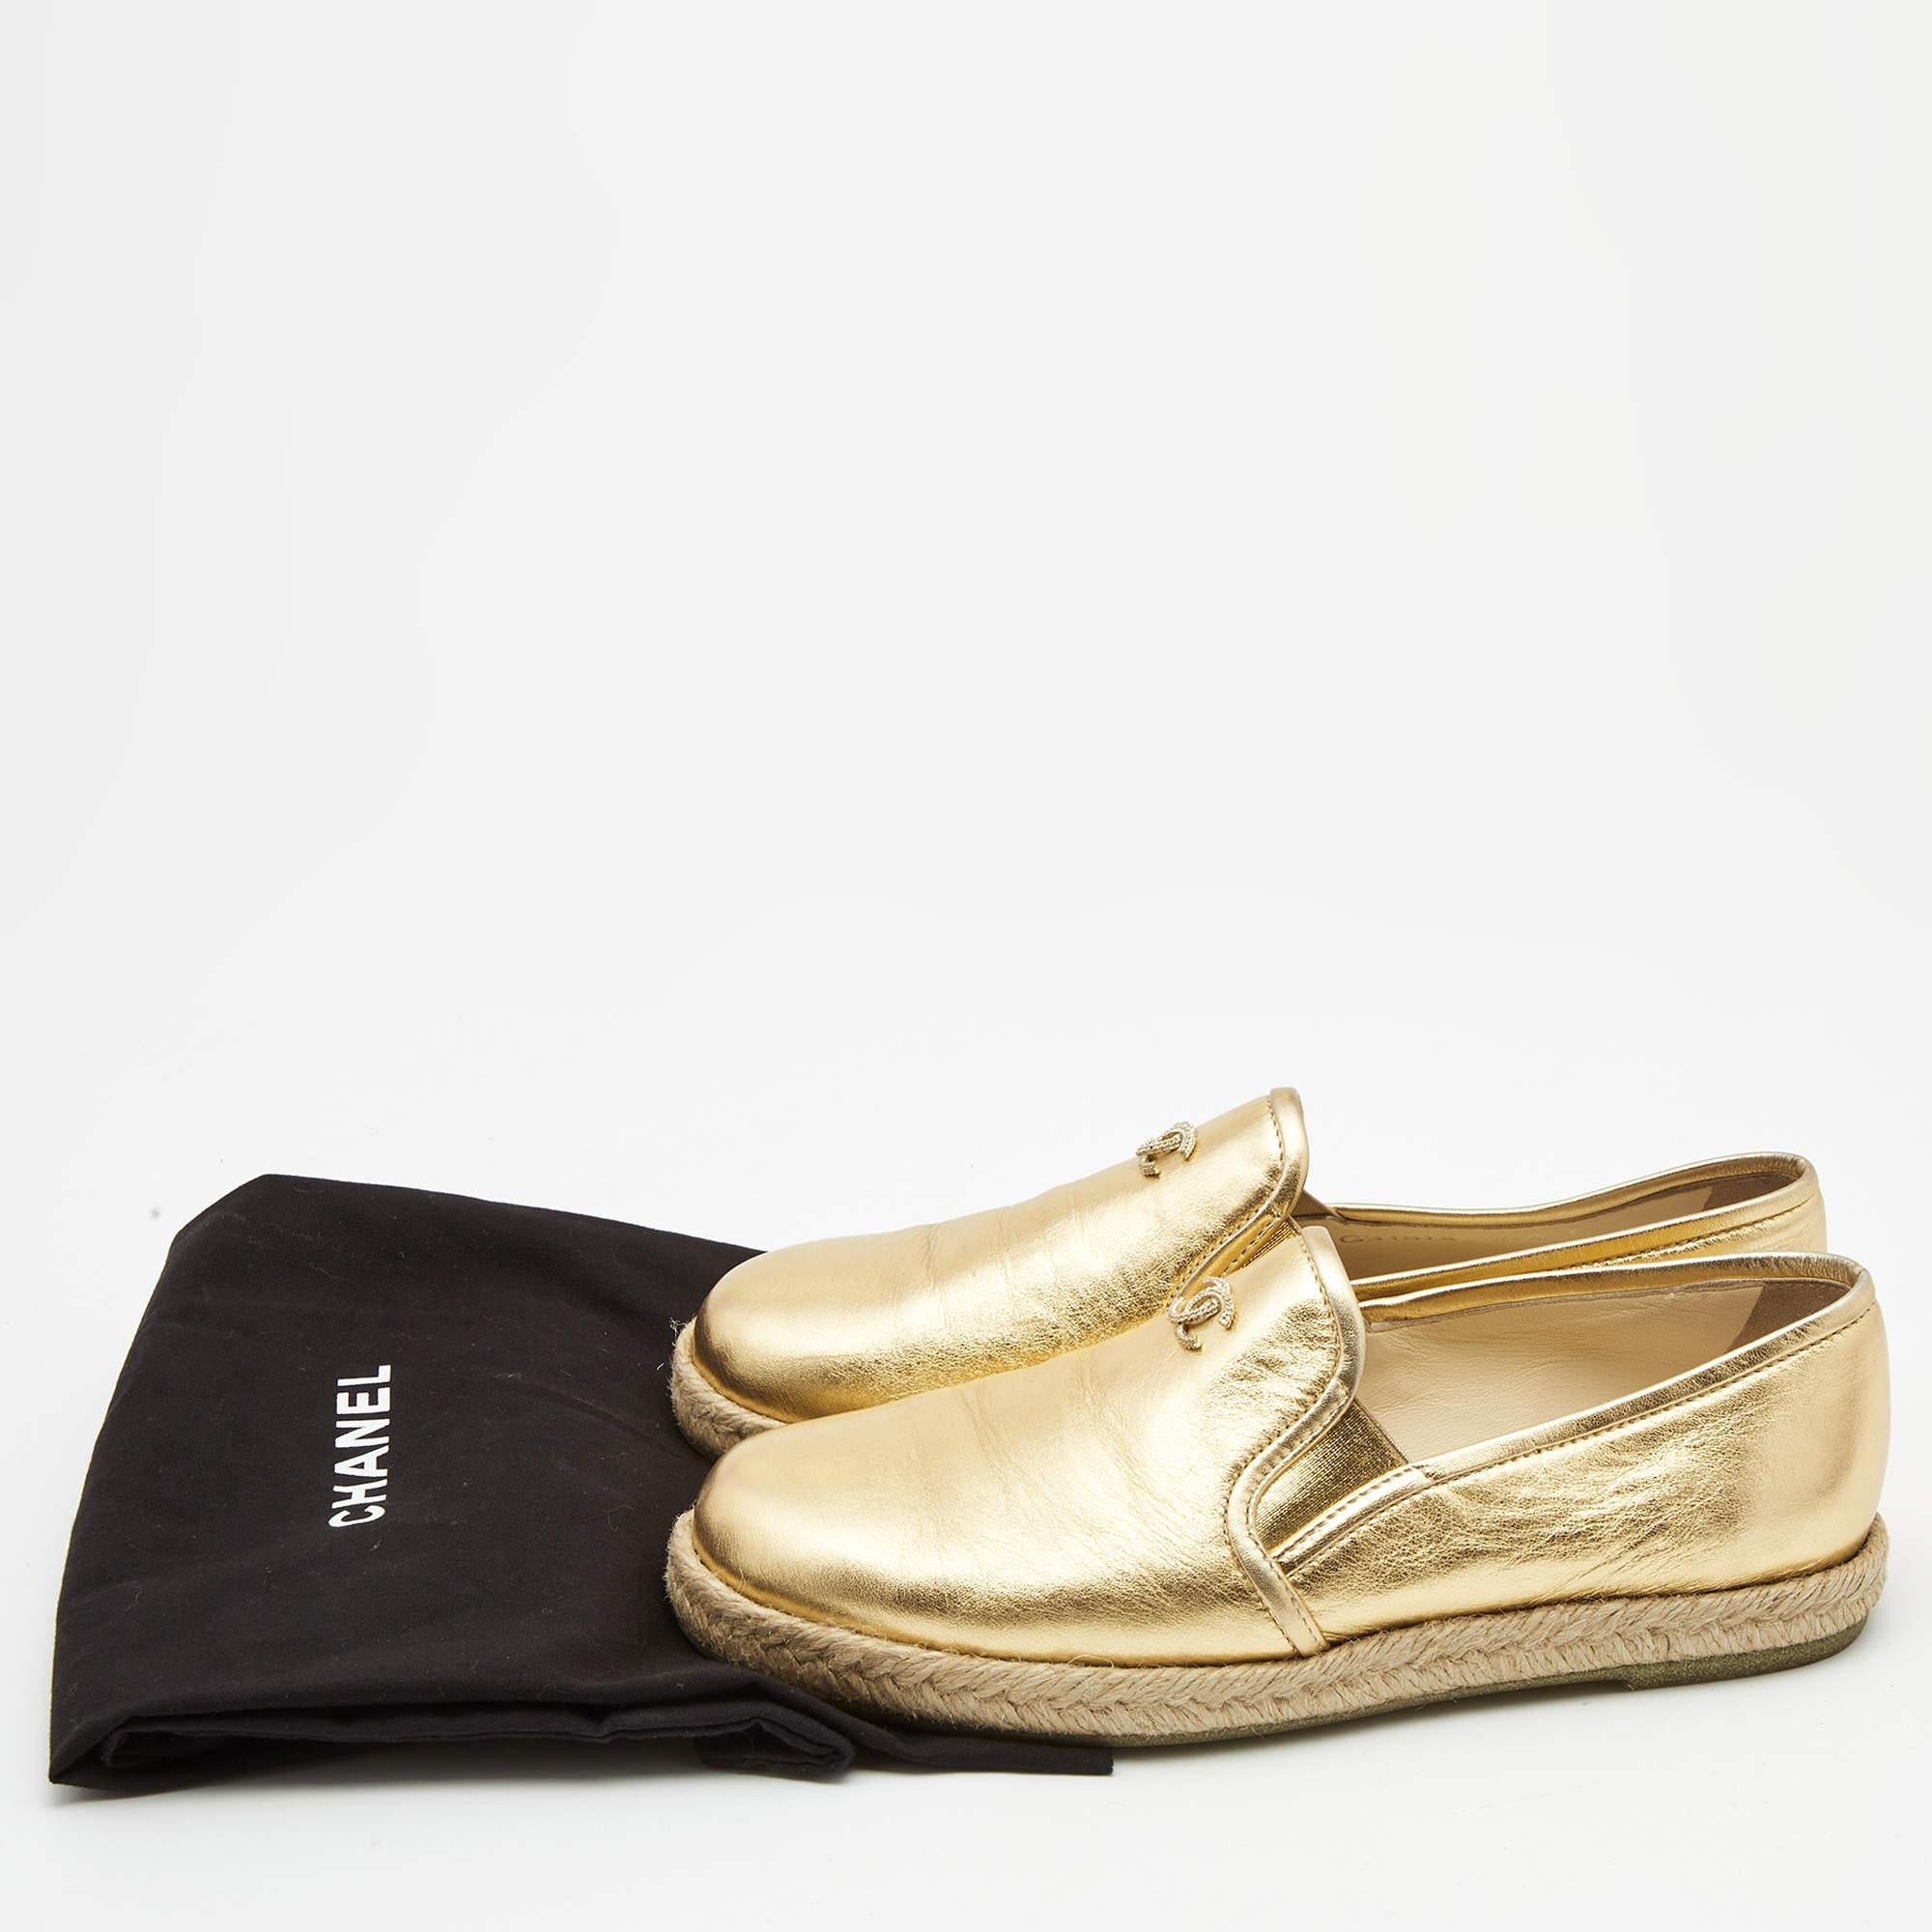 Chanel Metallic Gold Leather CC Slip On Espadrilles Flats Size 35.5 6